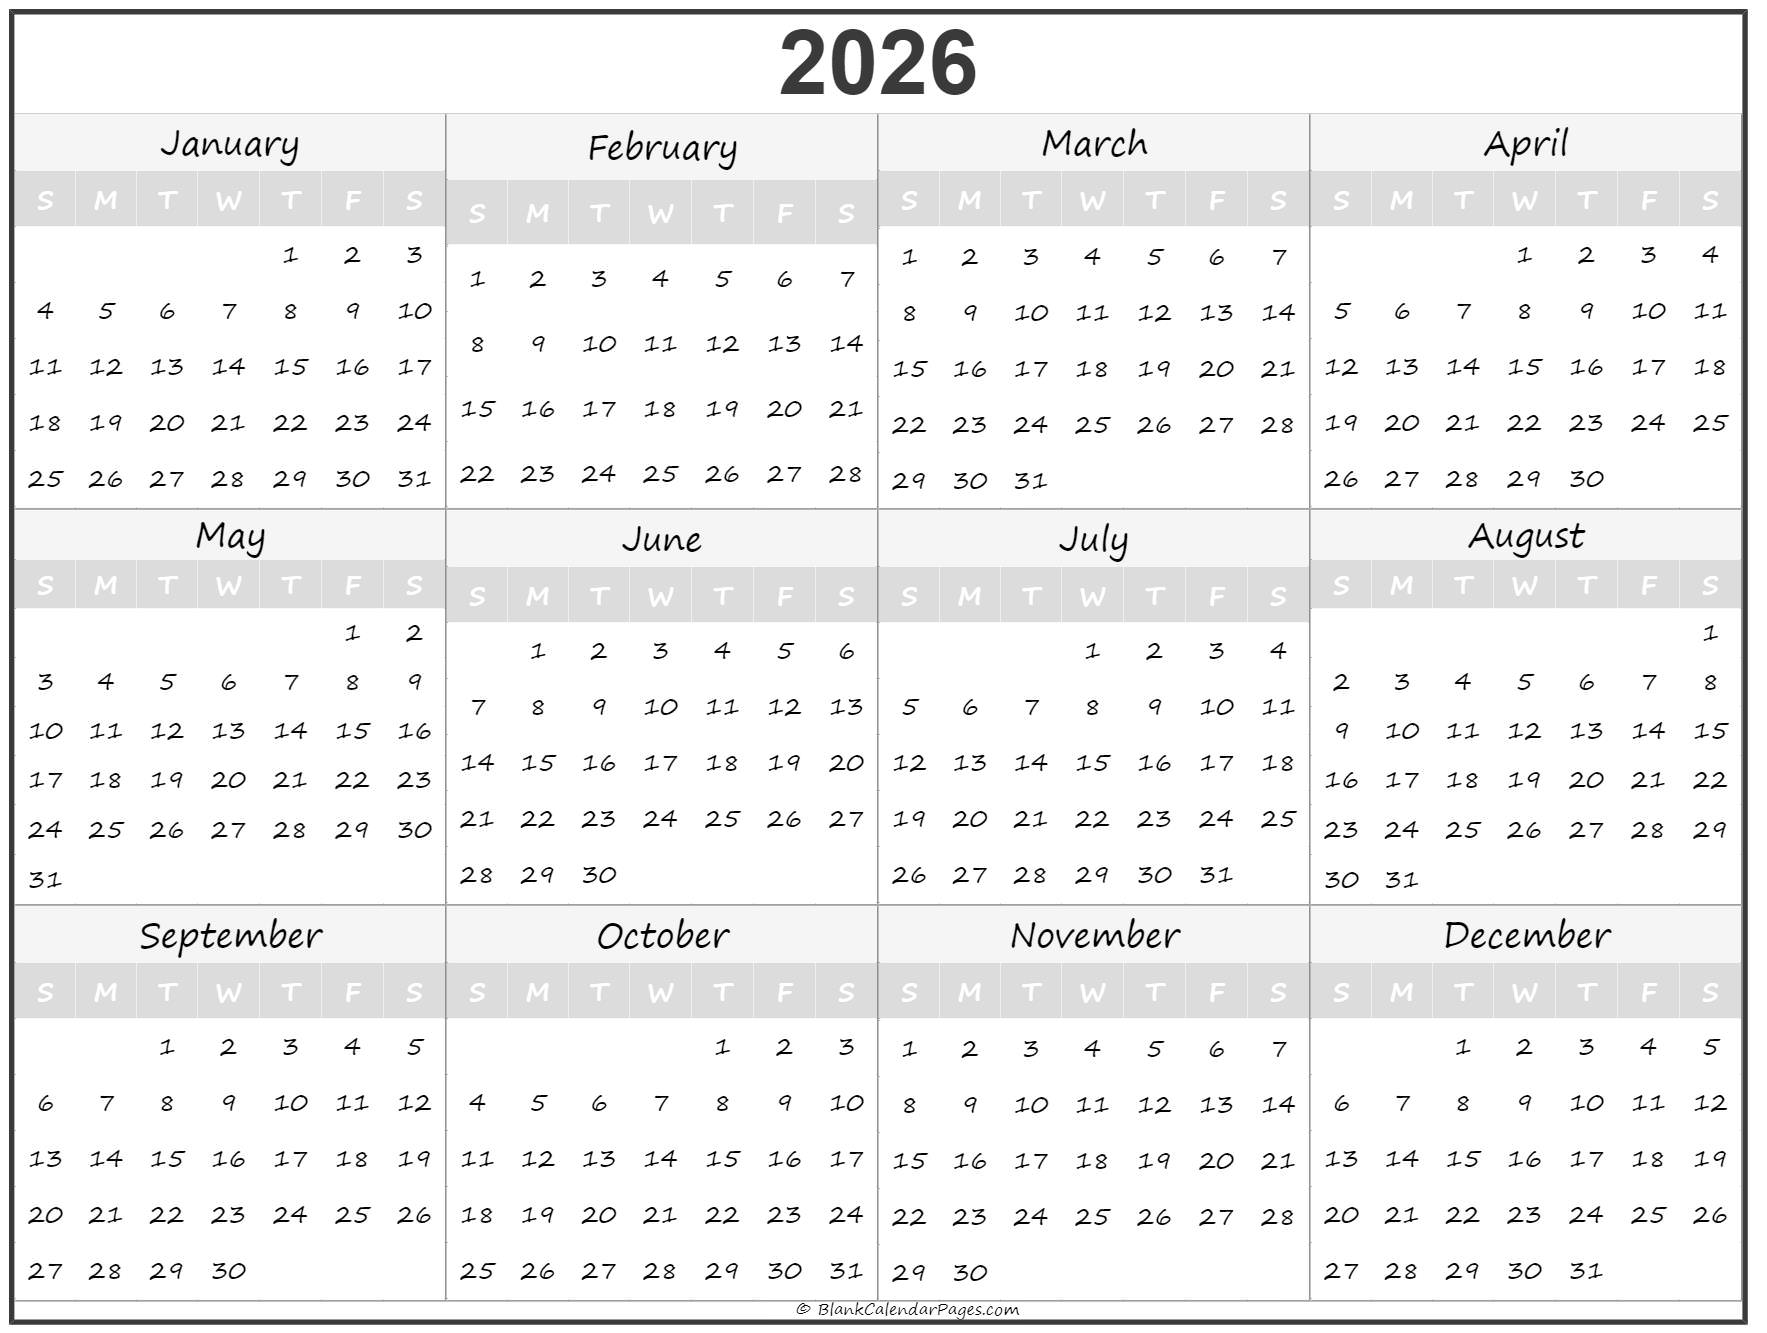 2026 yearly calendar 